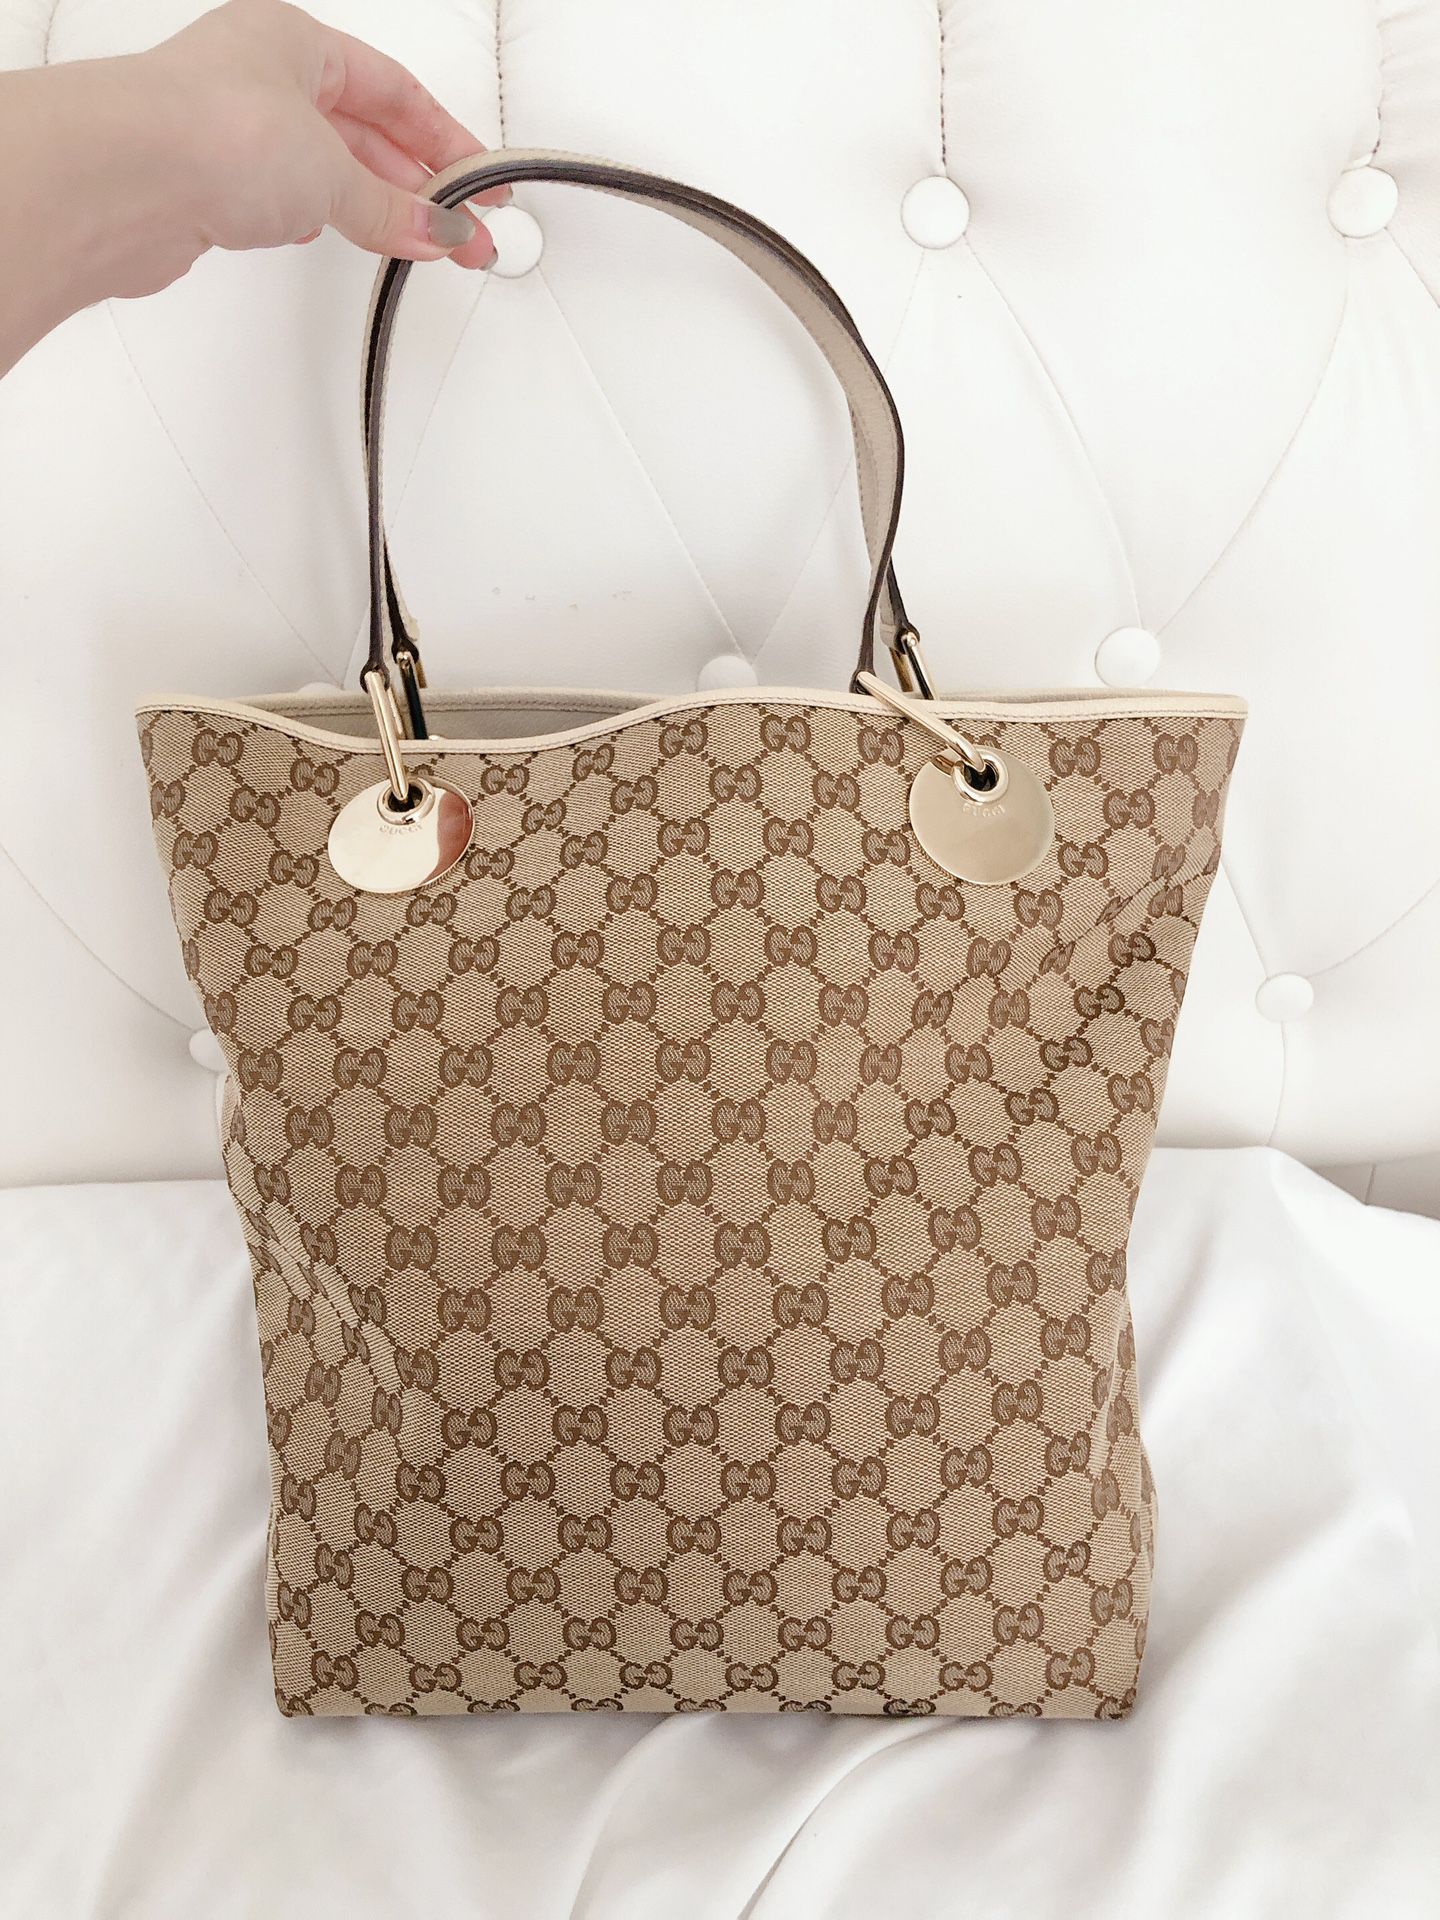 Brand new Gucci handbag